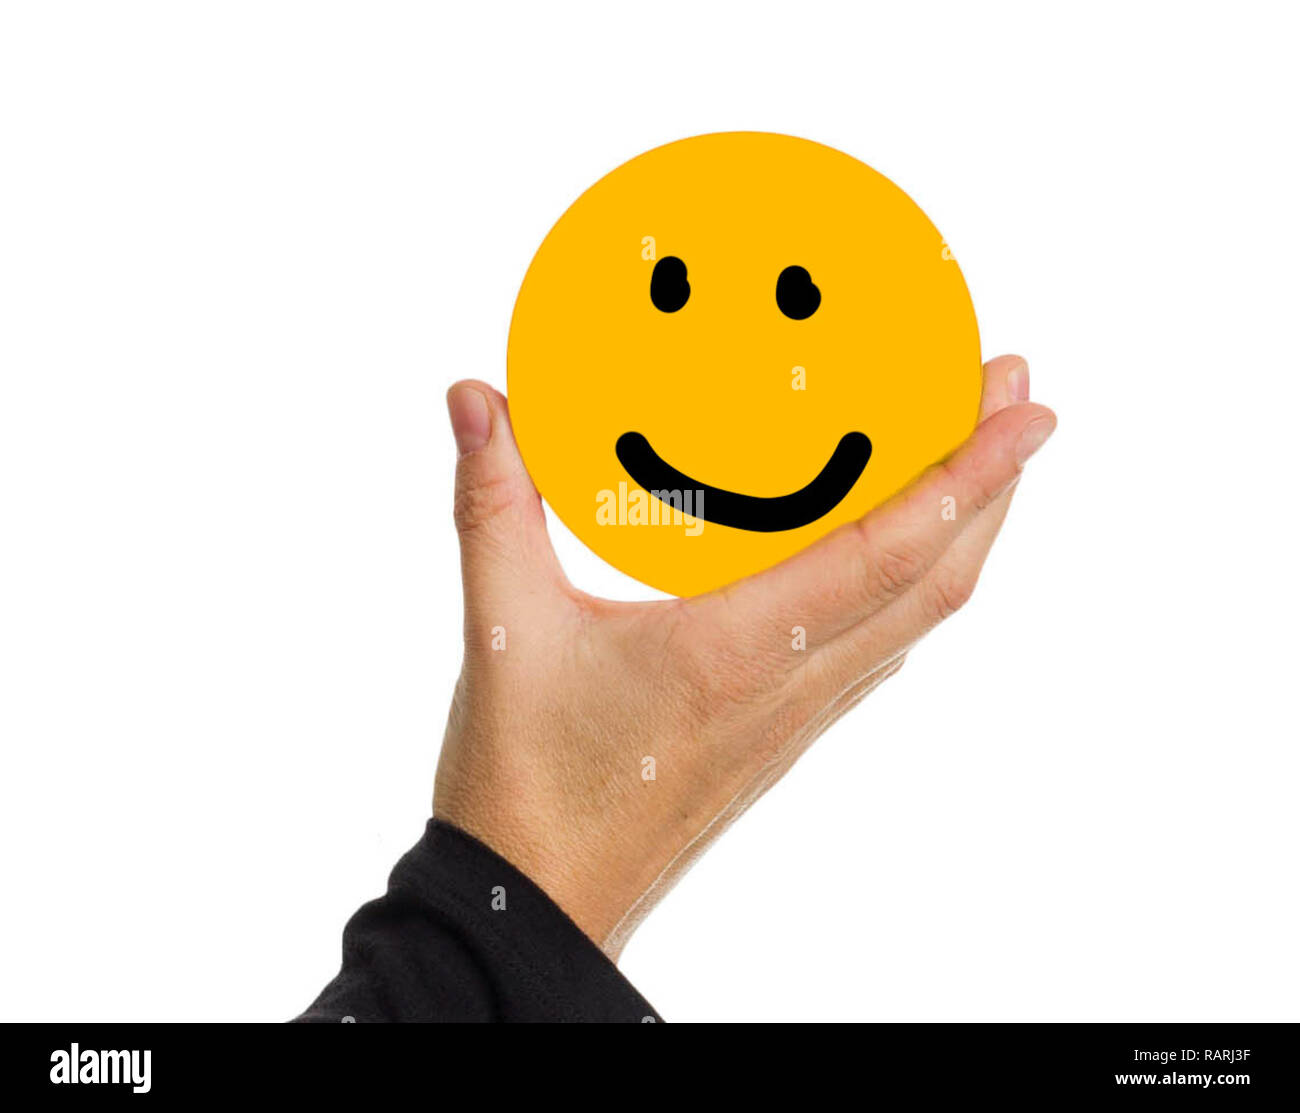 https://c8.alamy.com/comp/RARJ3F/hand-holding-a-yellow-circle-with-face-expression-smiling-RARJ3F.jpg